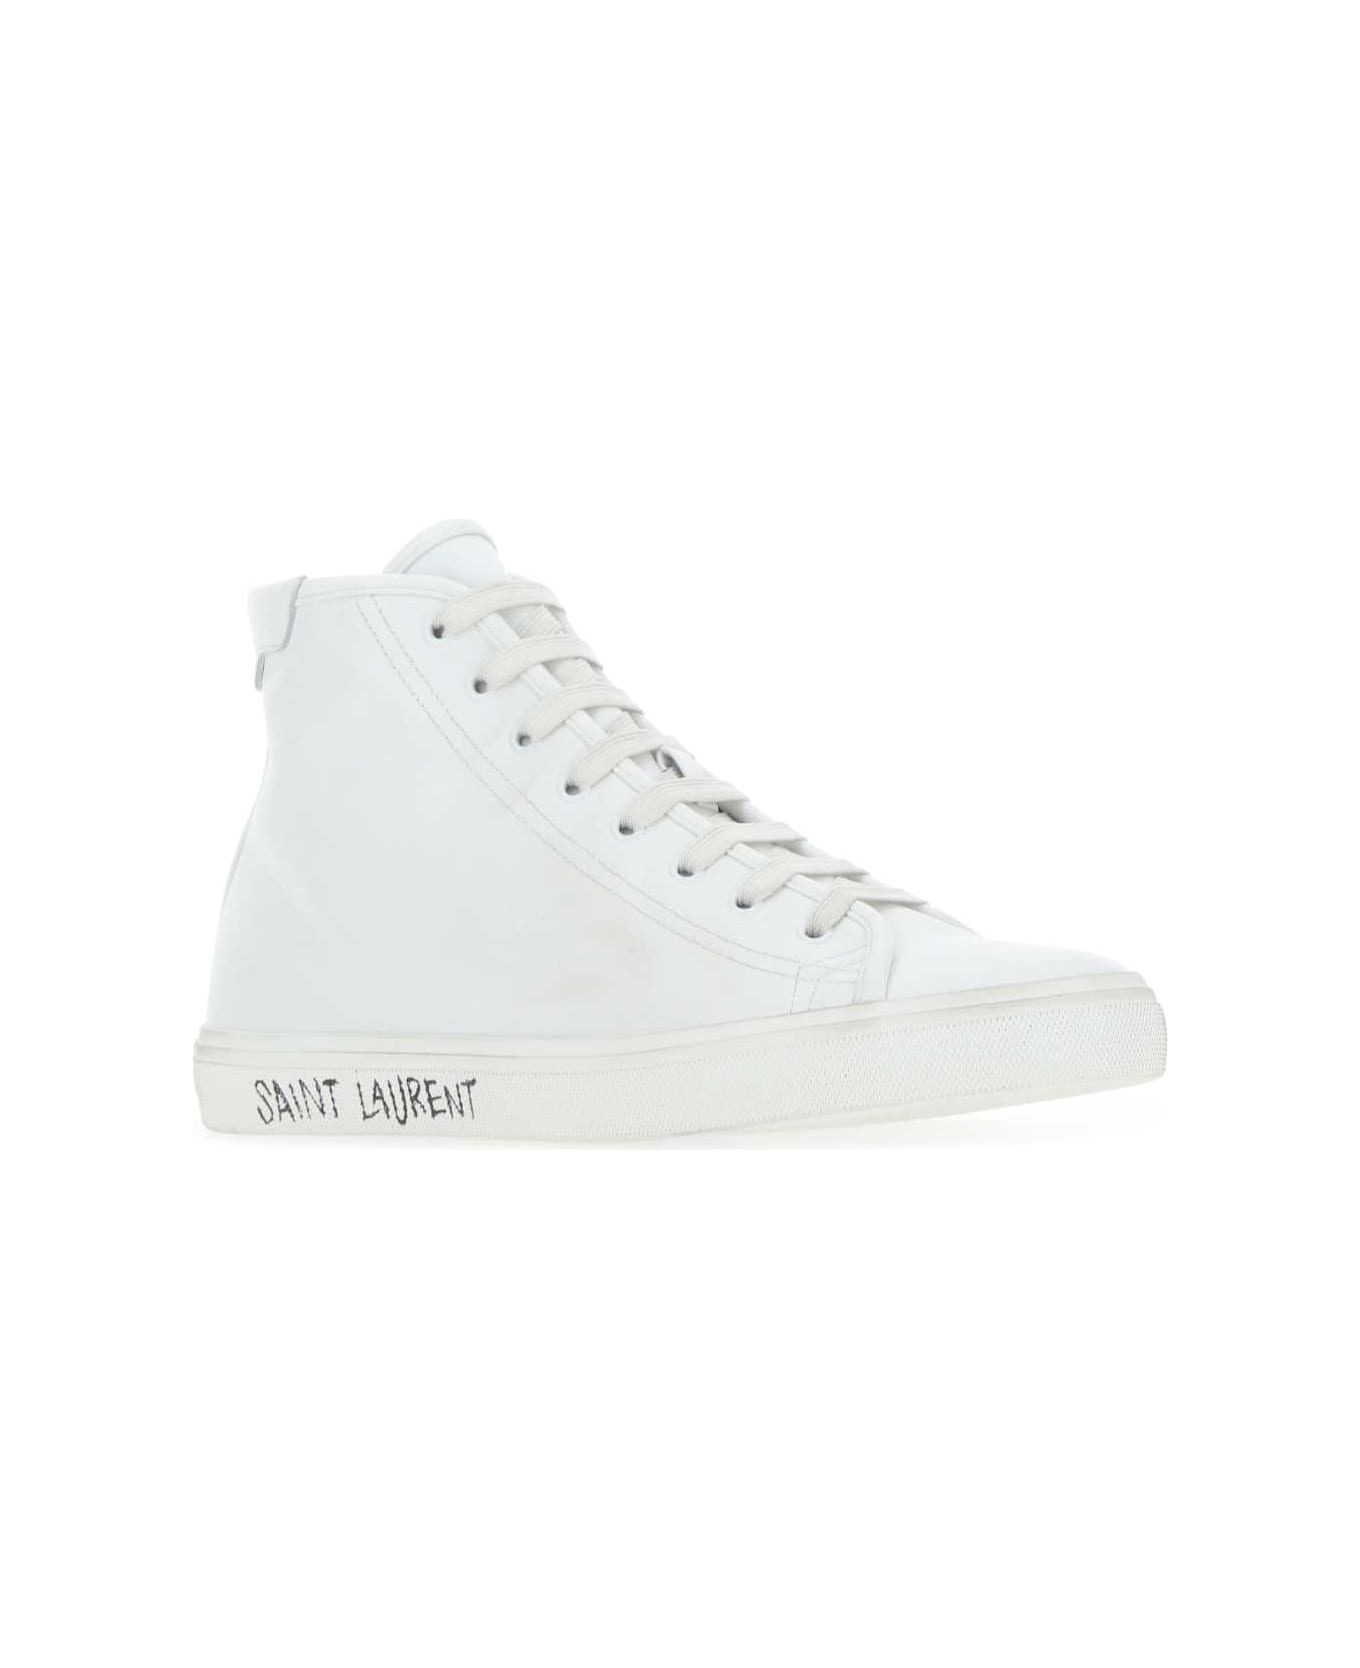 Saint Laurent White Leather Malibu Sneakers - 9030